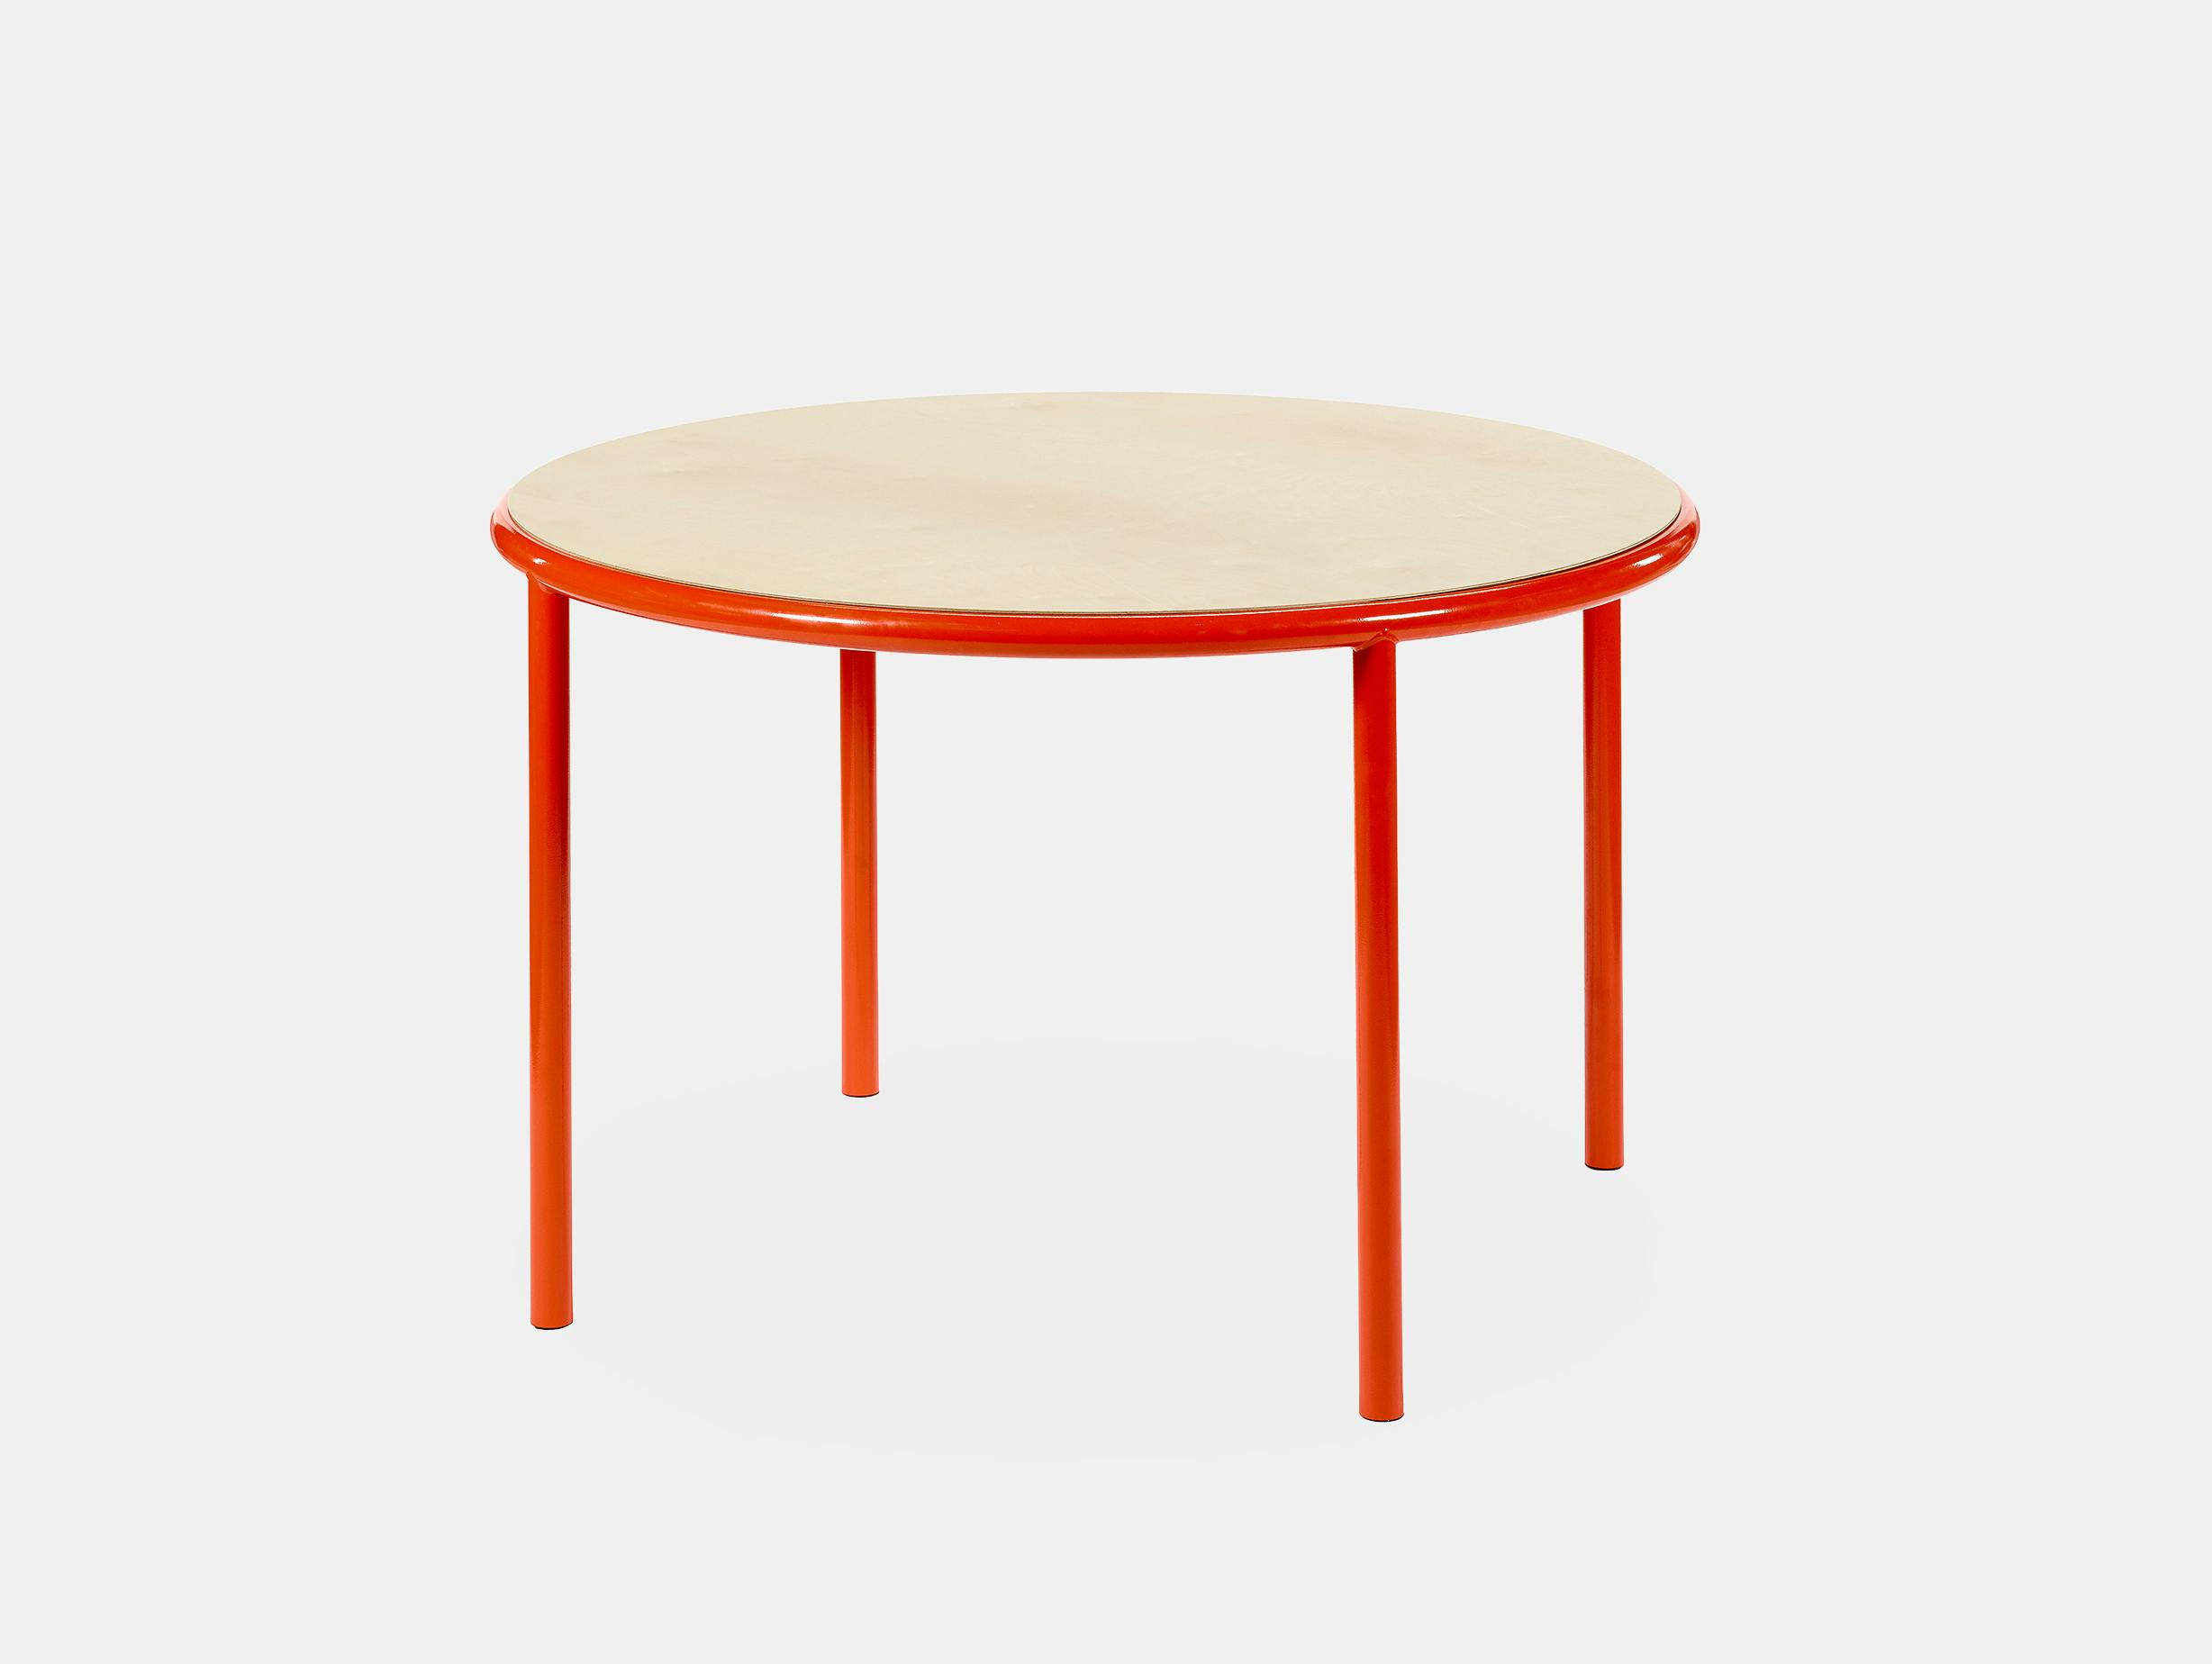 Muller van severen wooden table small round red birch